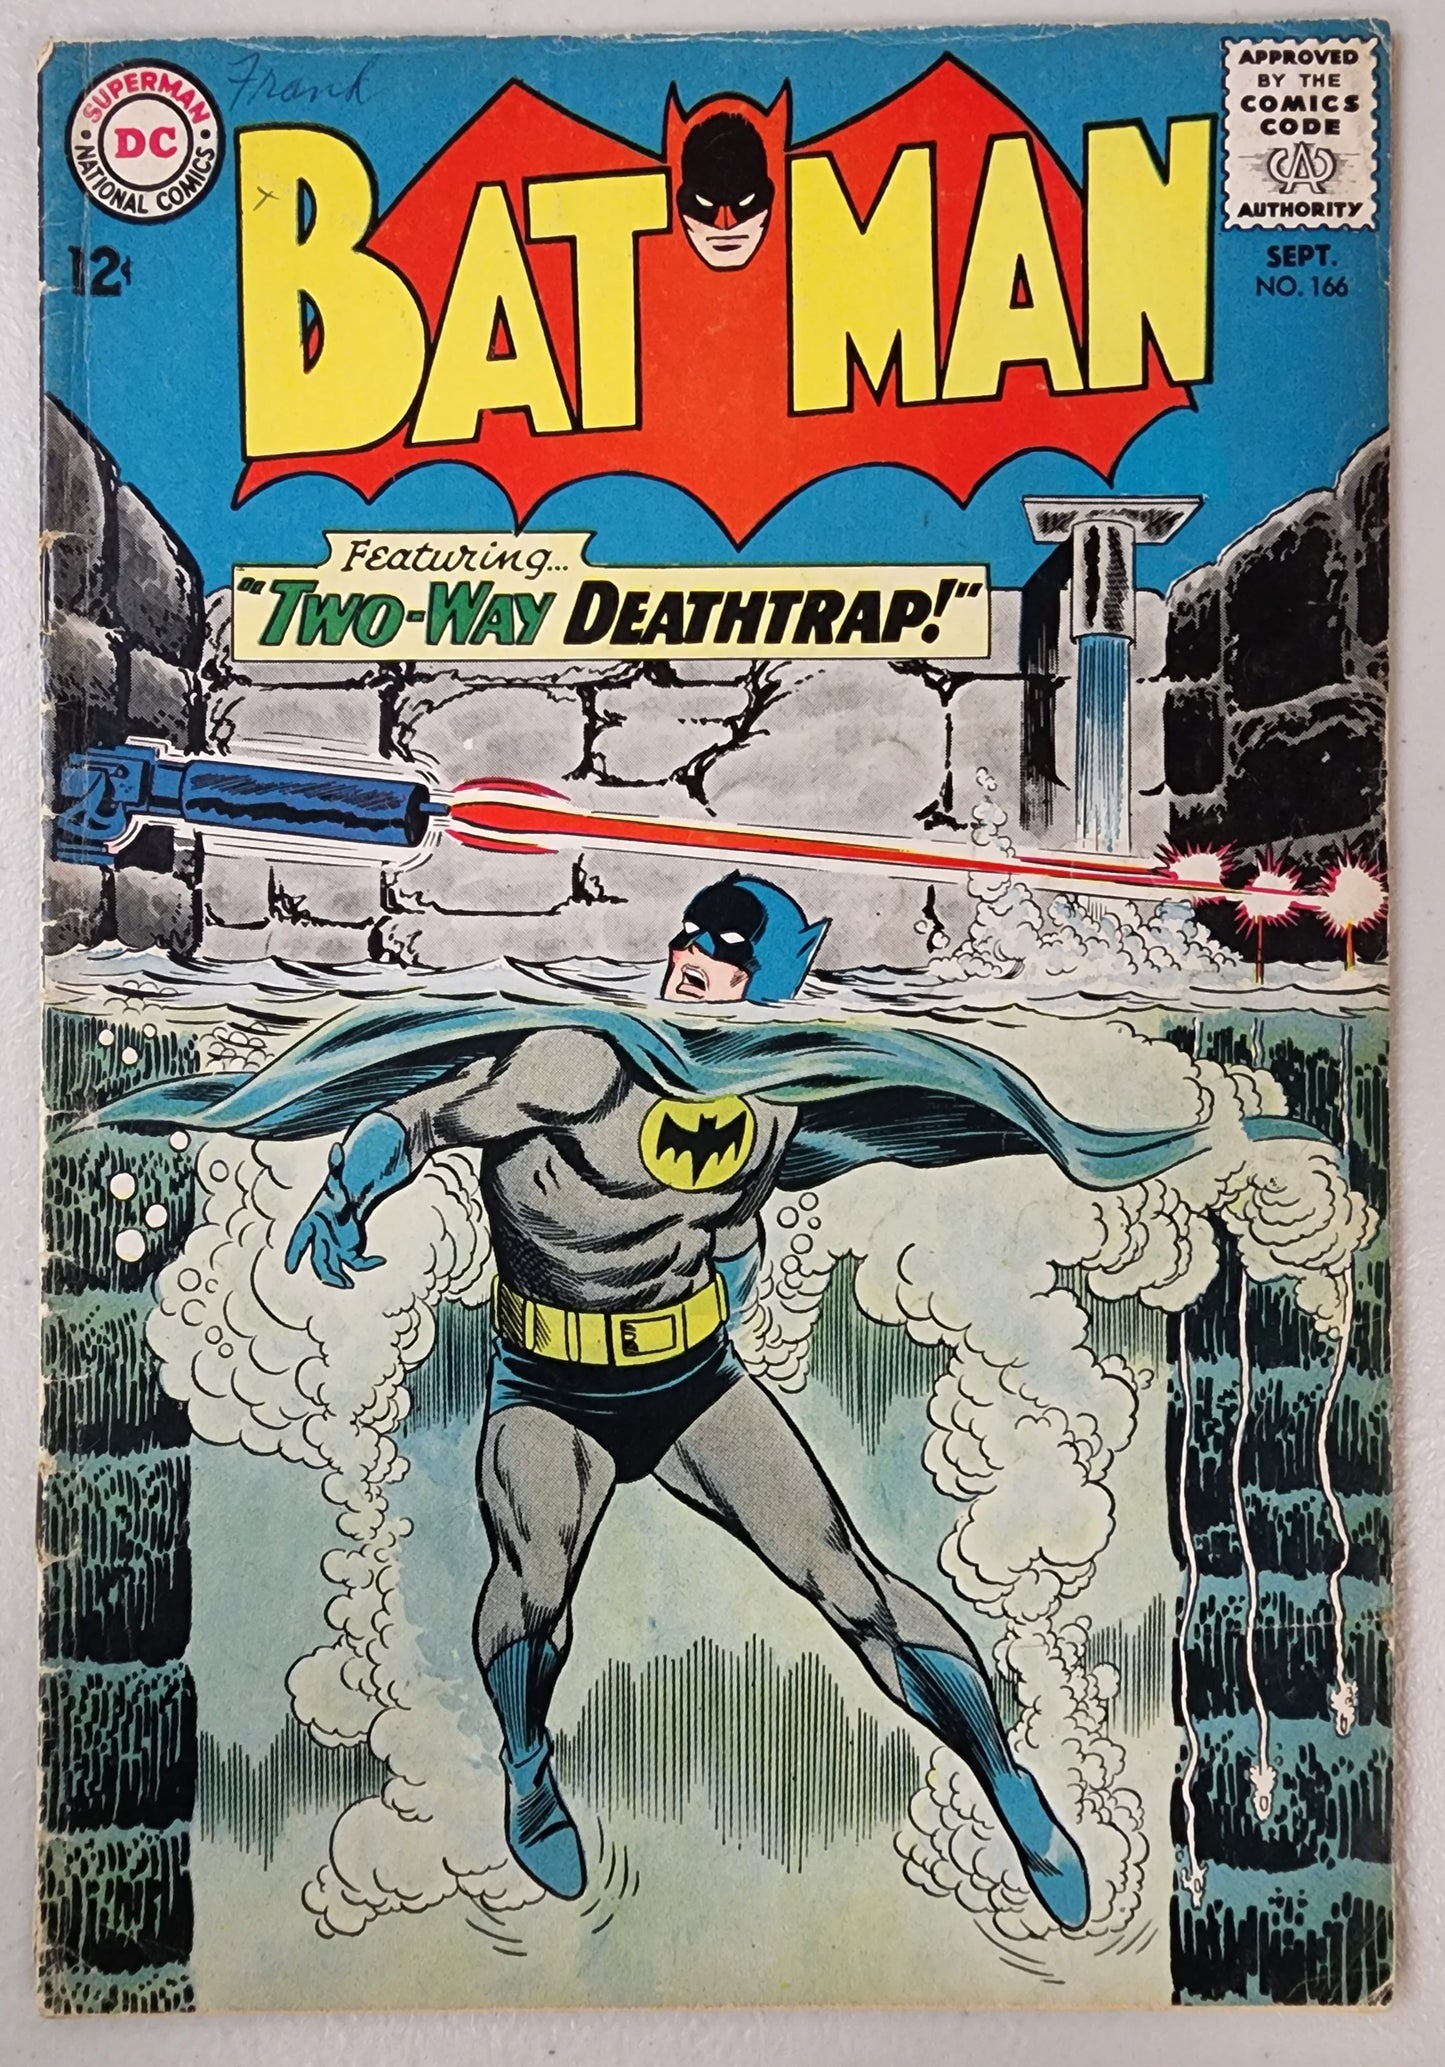 BATMAN #166 1964